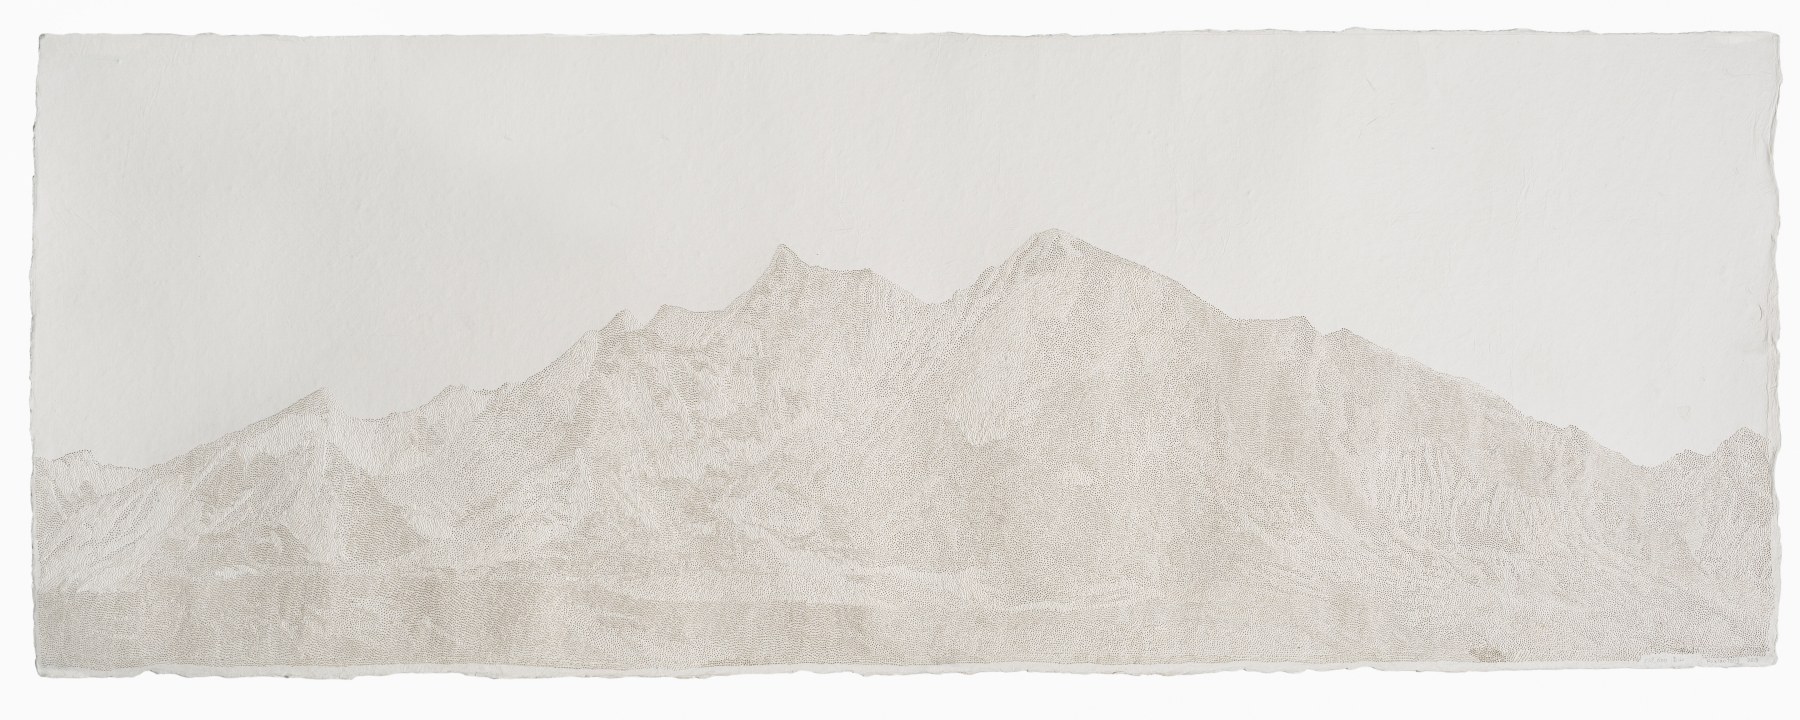 Fu Xiaotong 付小桐 (b. 1976), 518,600 Pinpricks-Sacred Mountain 518,600 孔-圣山